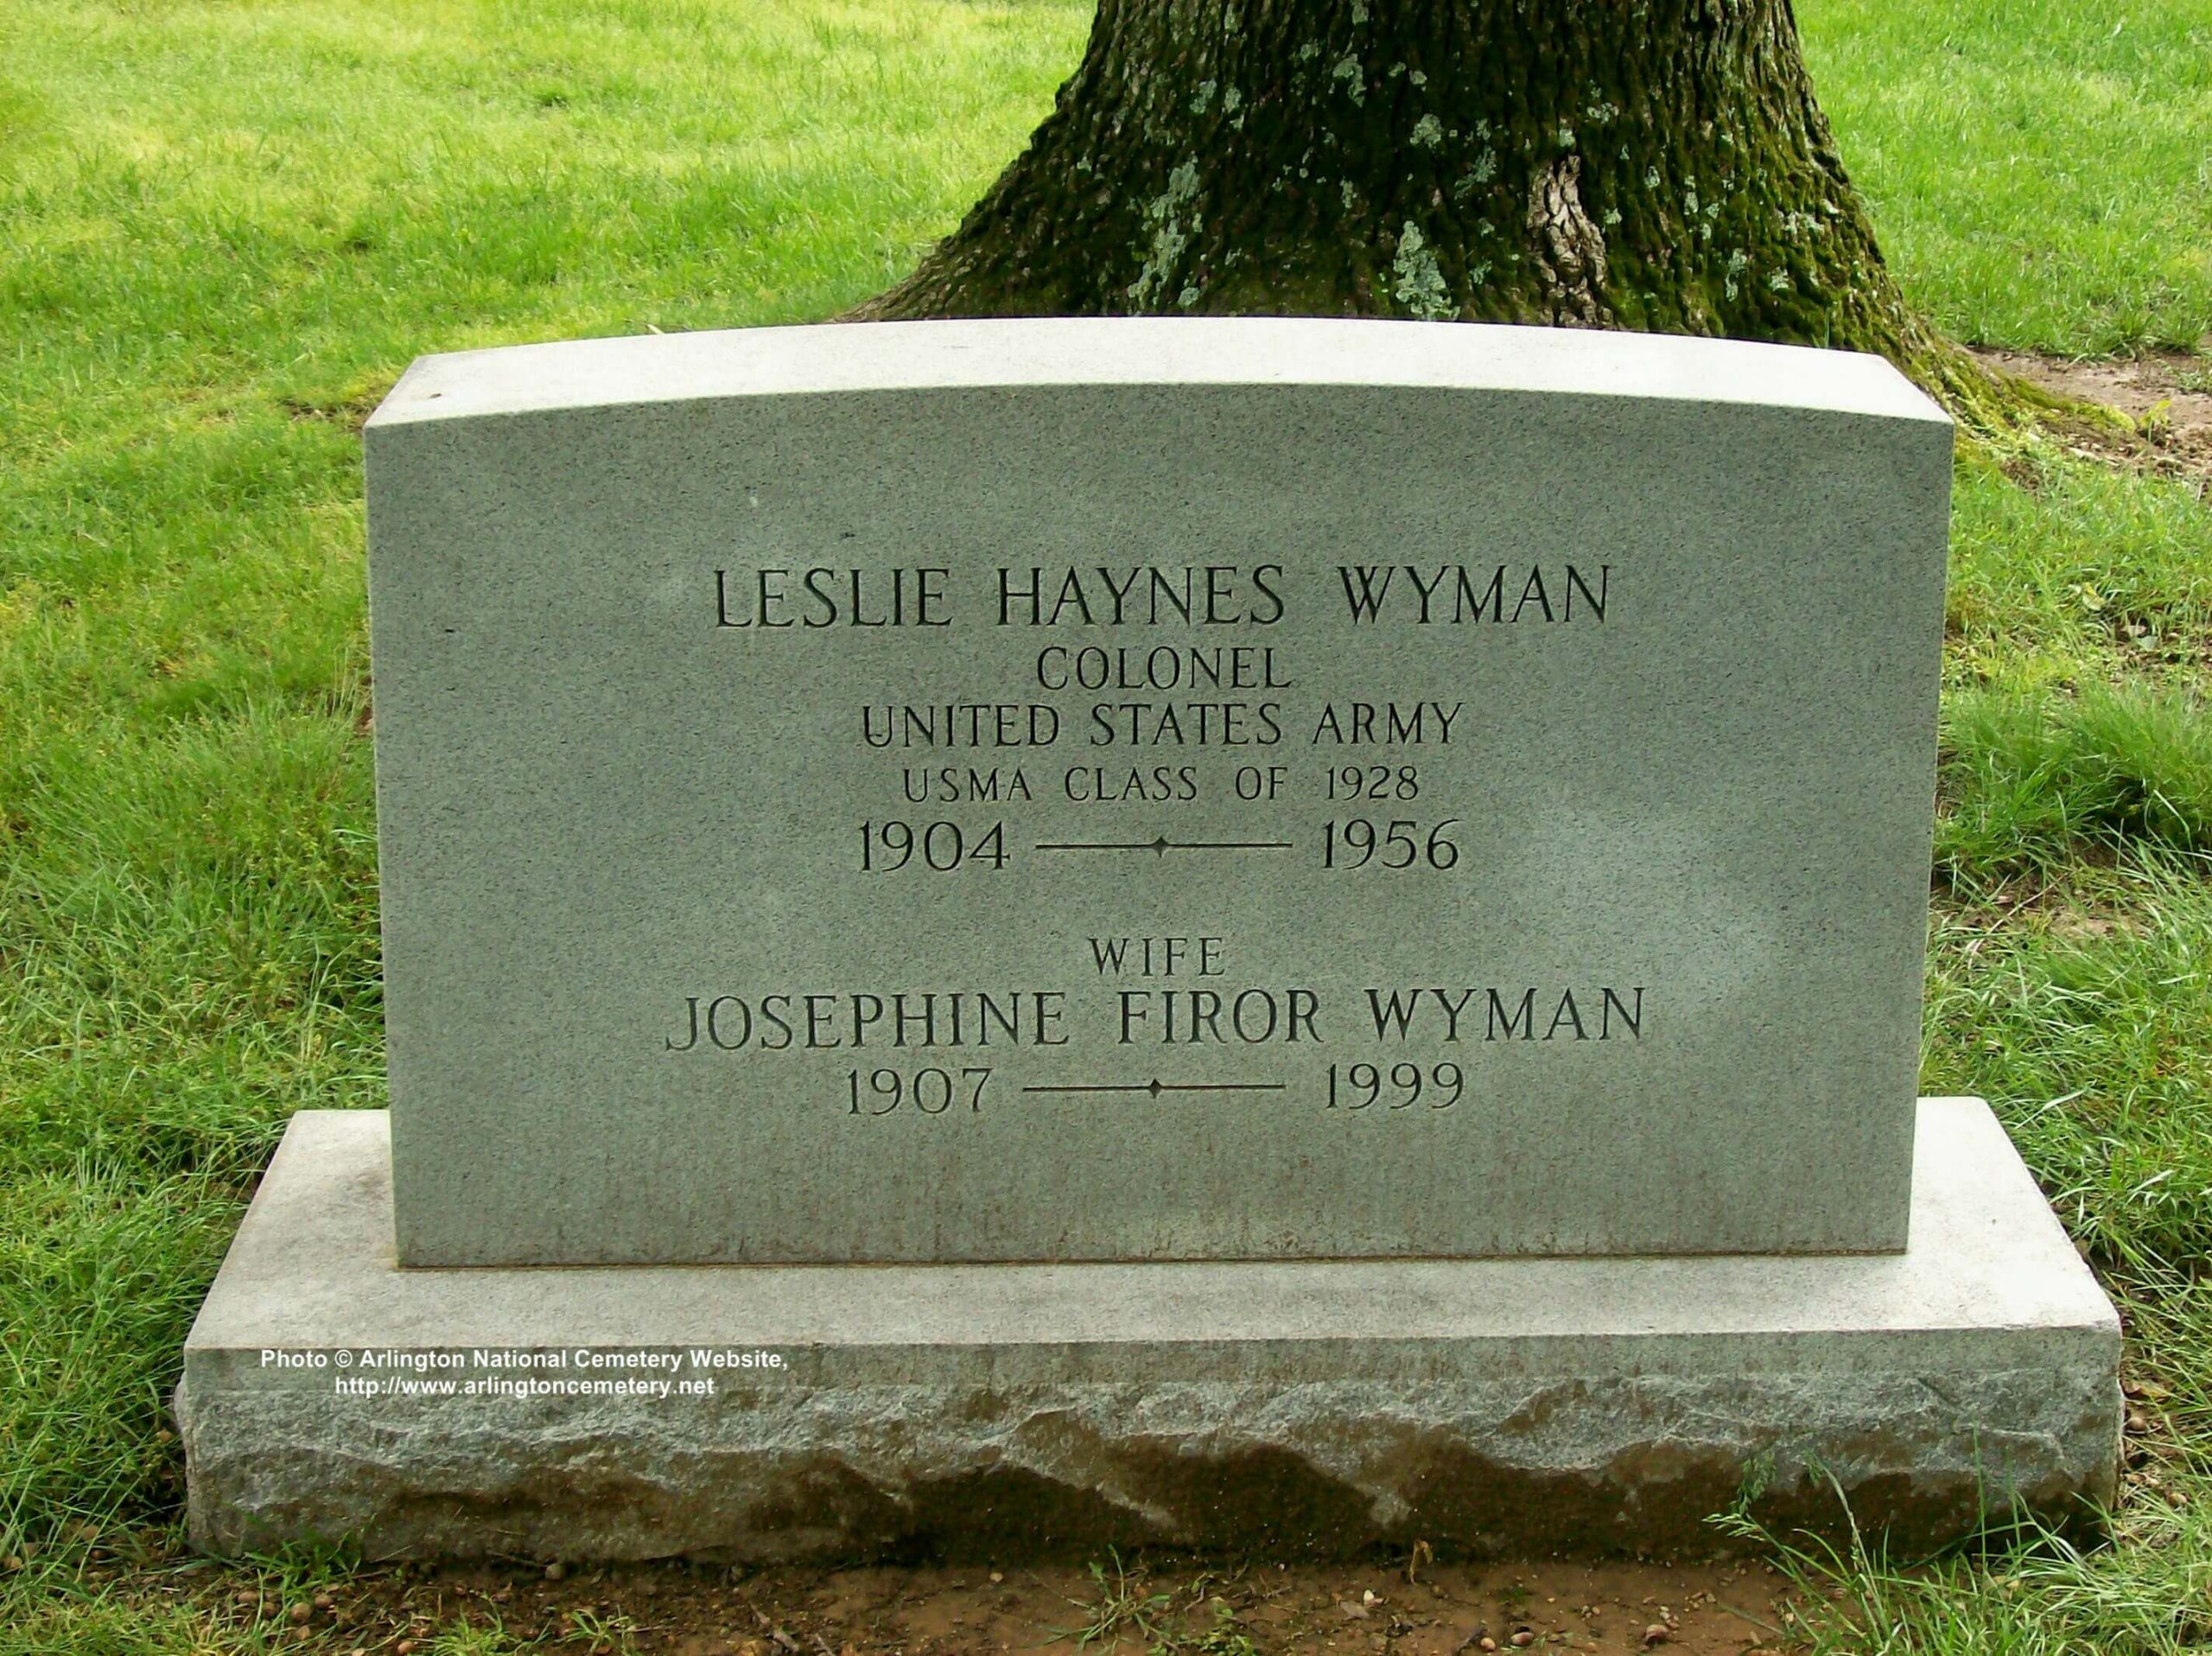 lhwyman-gravesite-photo-may-2008-001